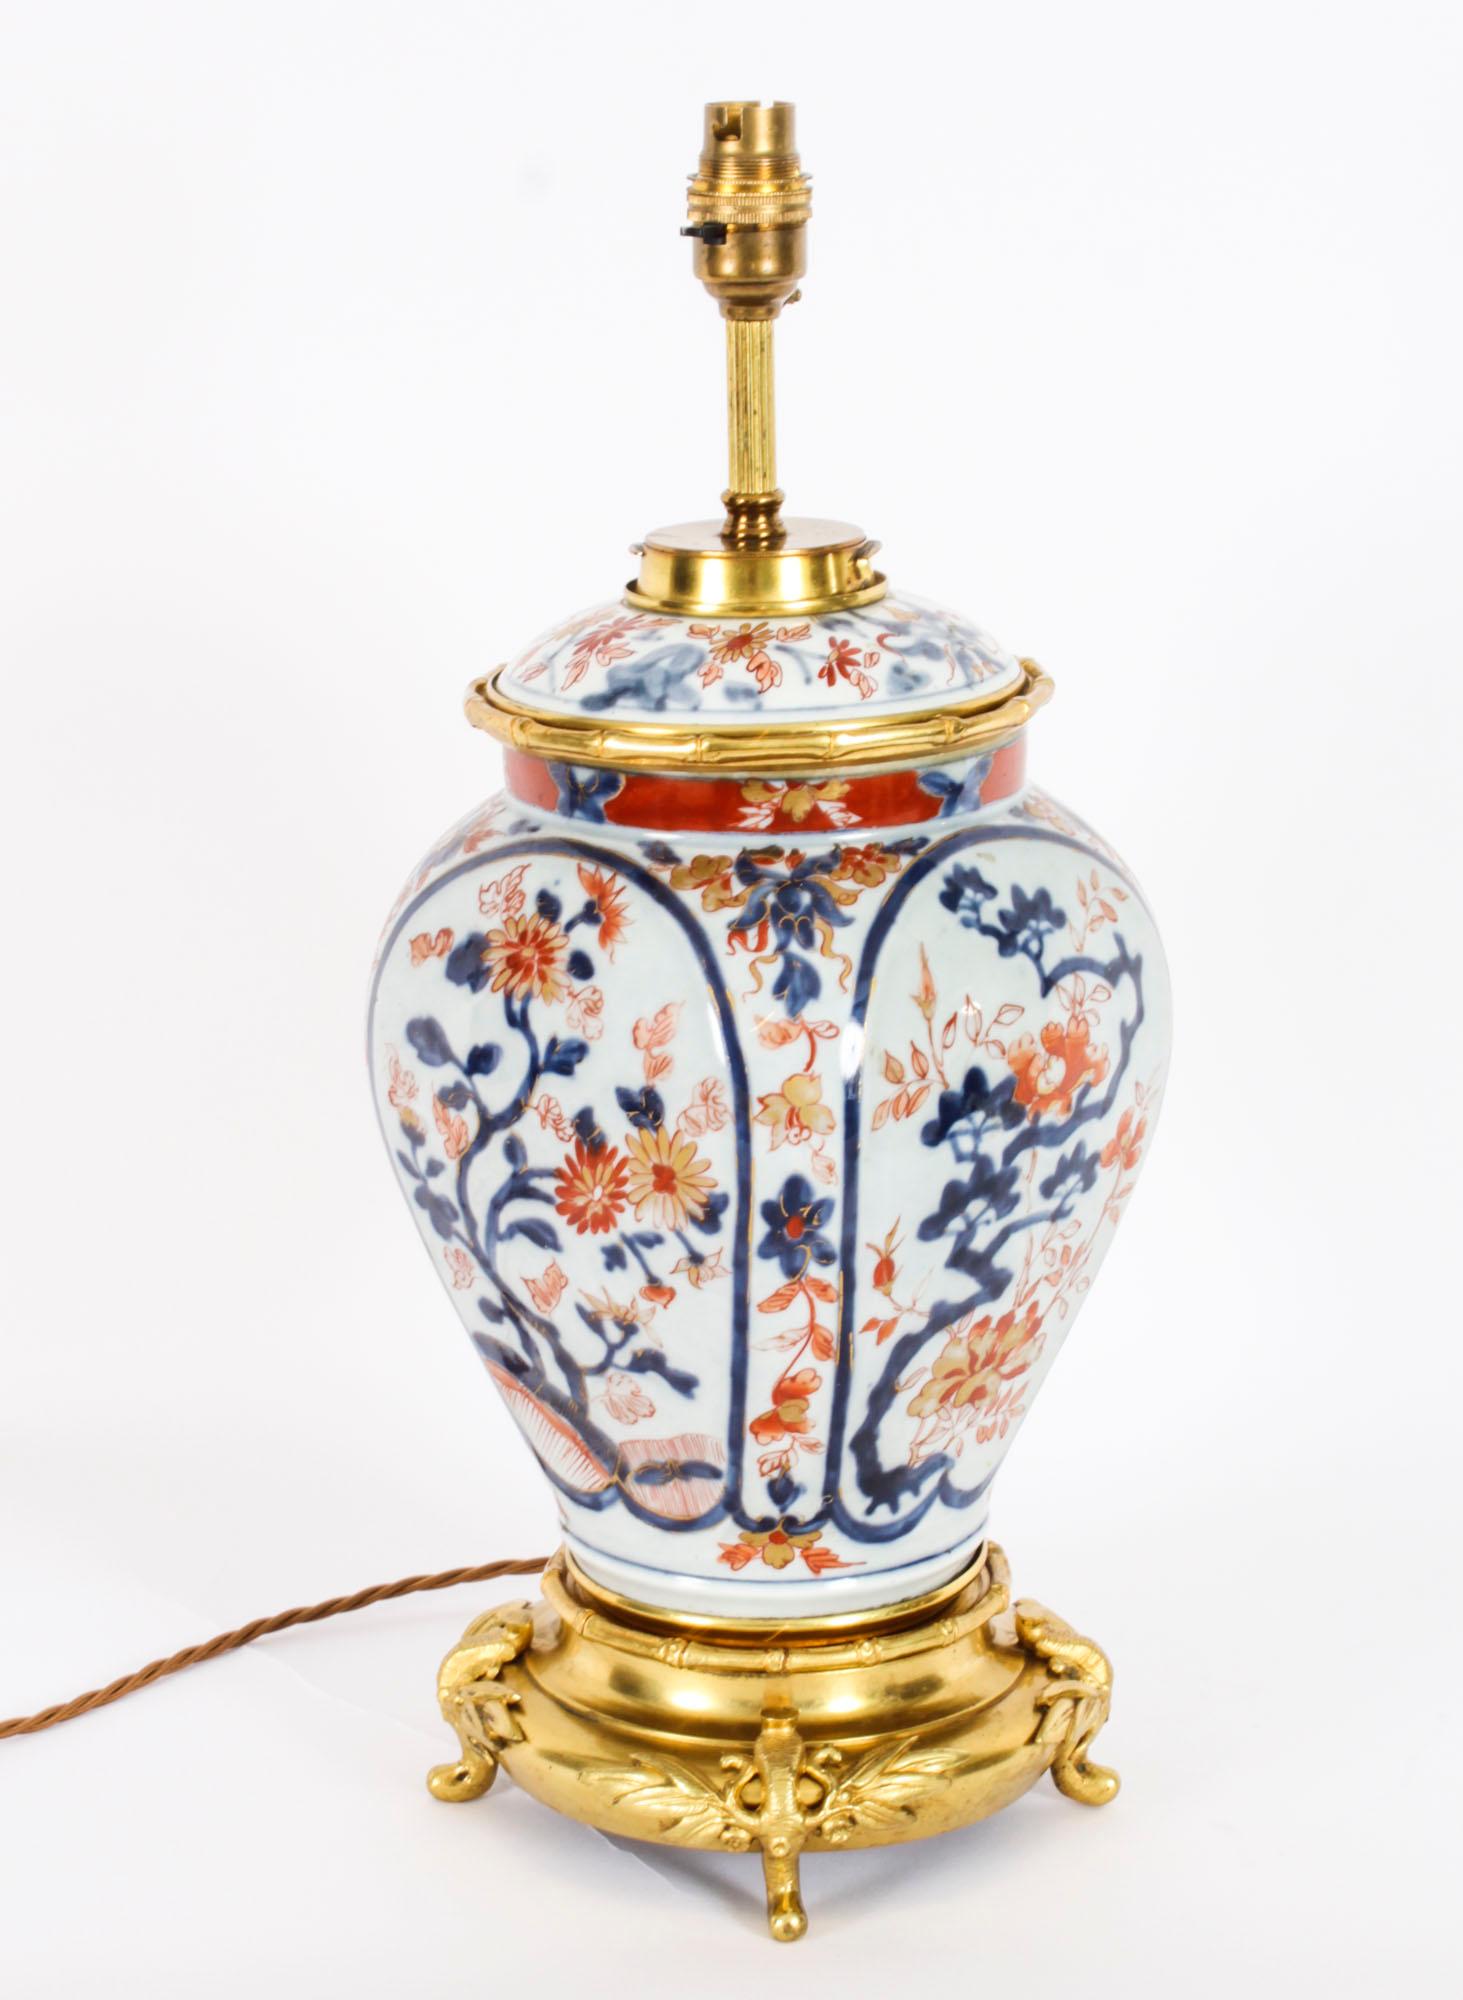 Antique Japanese Imari Porcelain Table Lamp c. 1840 19th Century For Sale 10